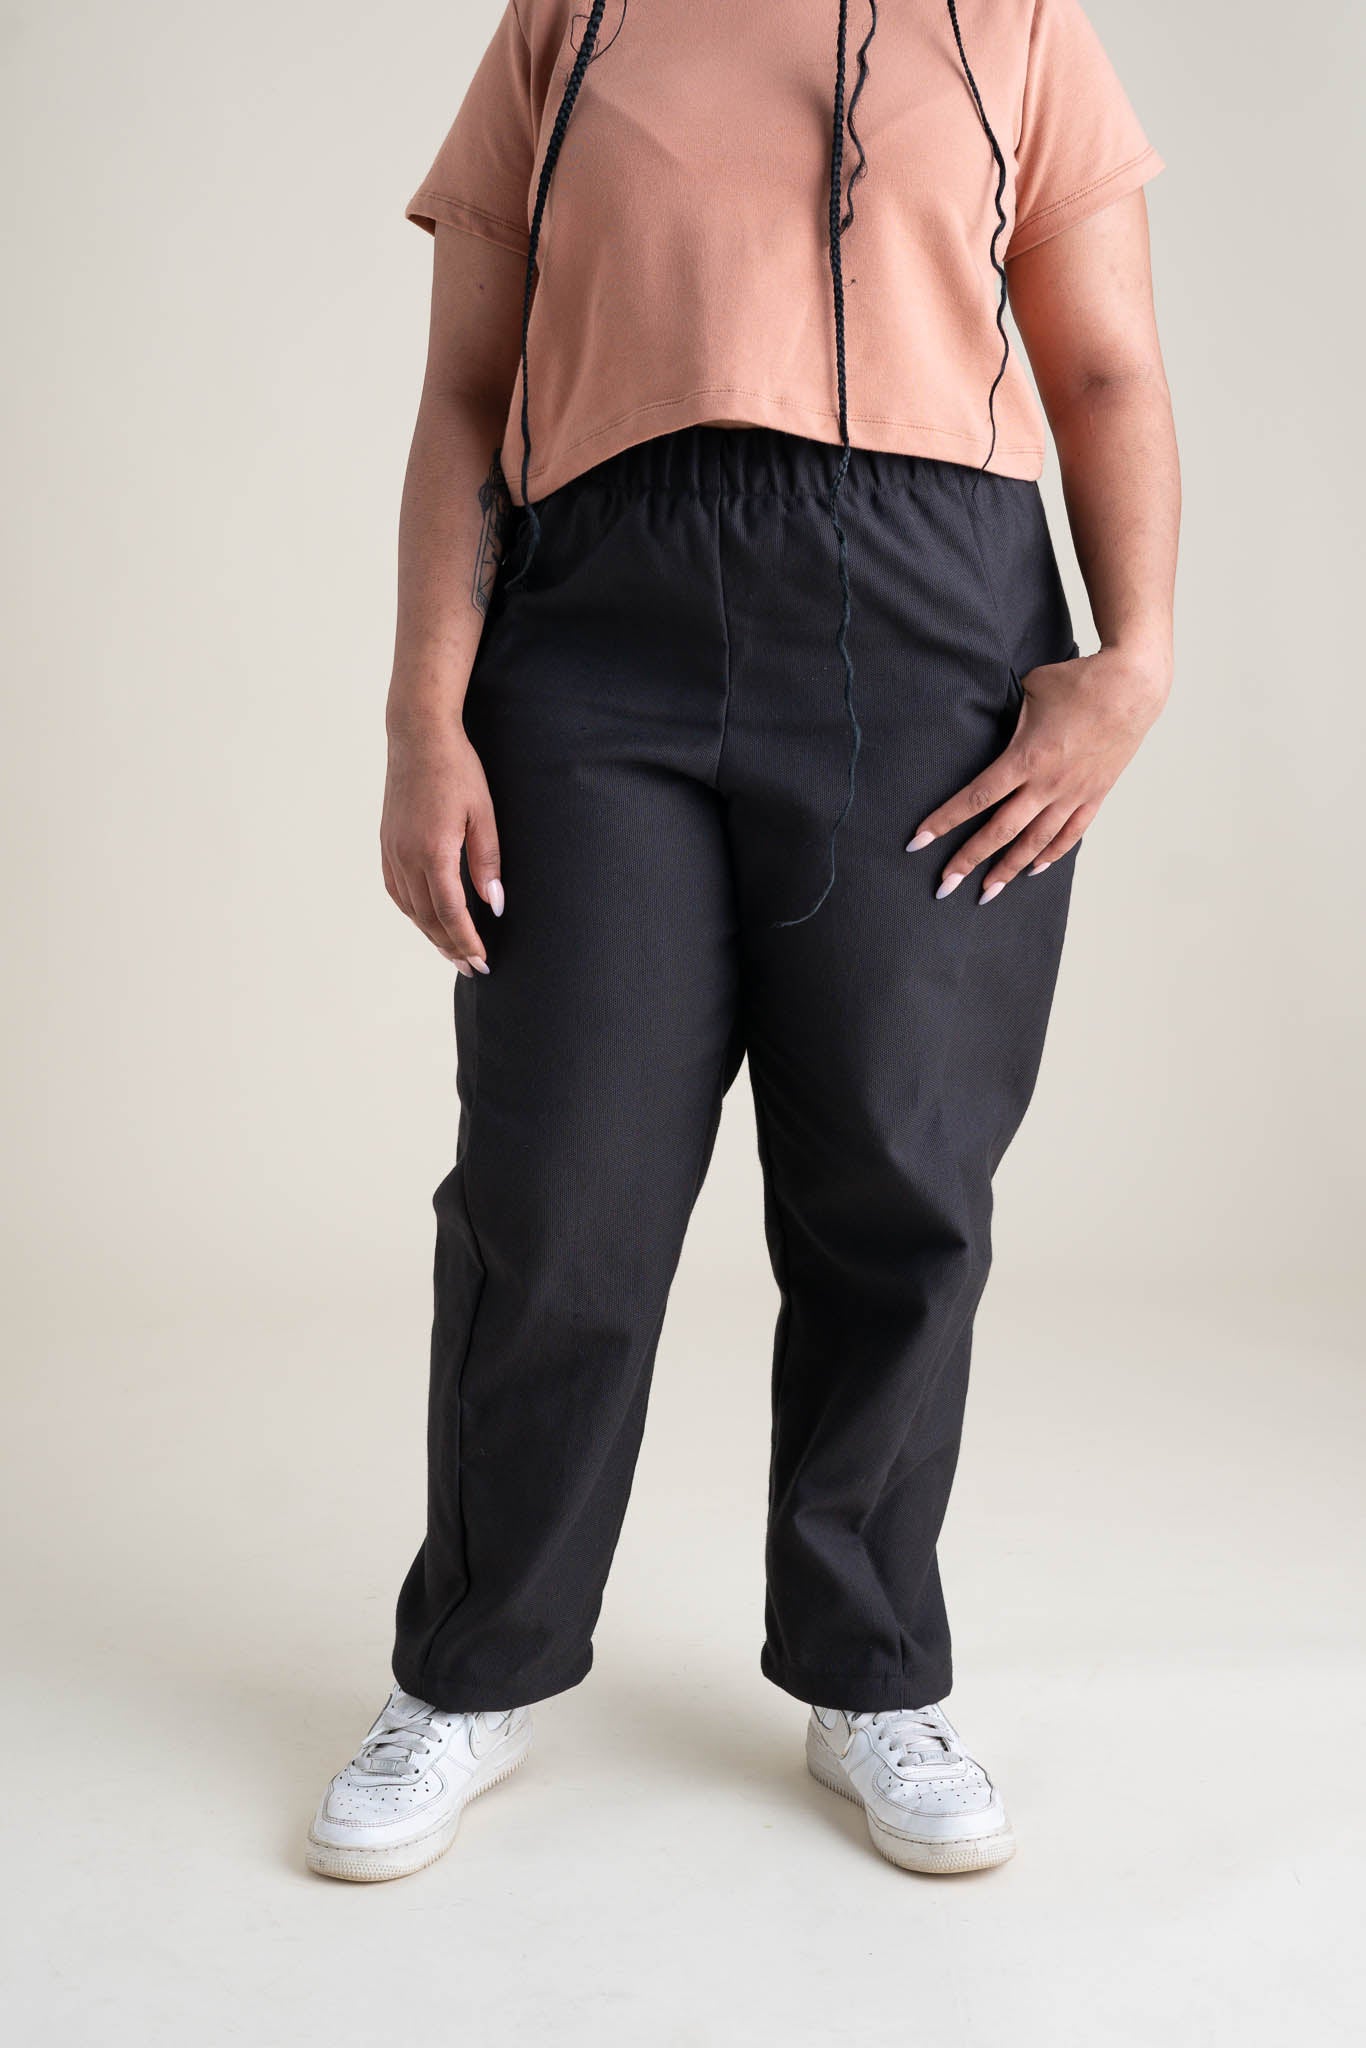 Patagonia Nylon Pants Mens size L outdoor nylon trousers | eBay